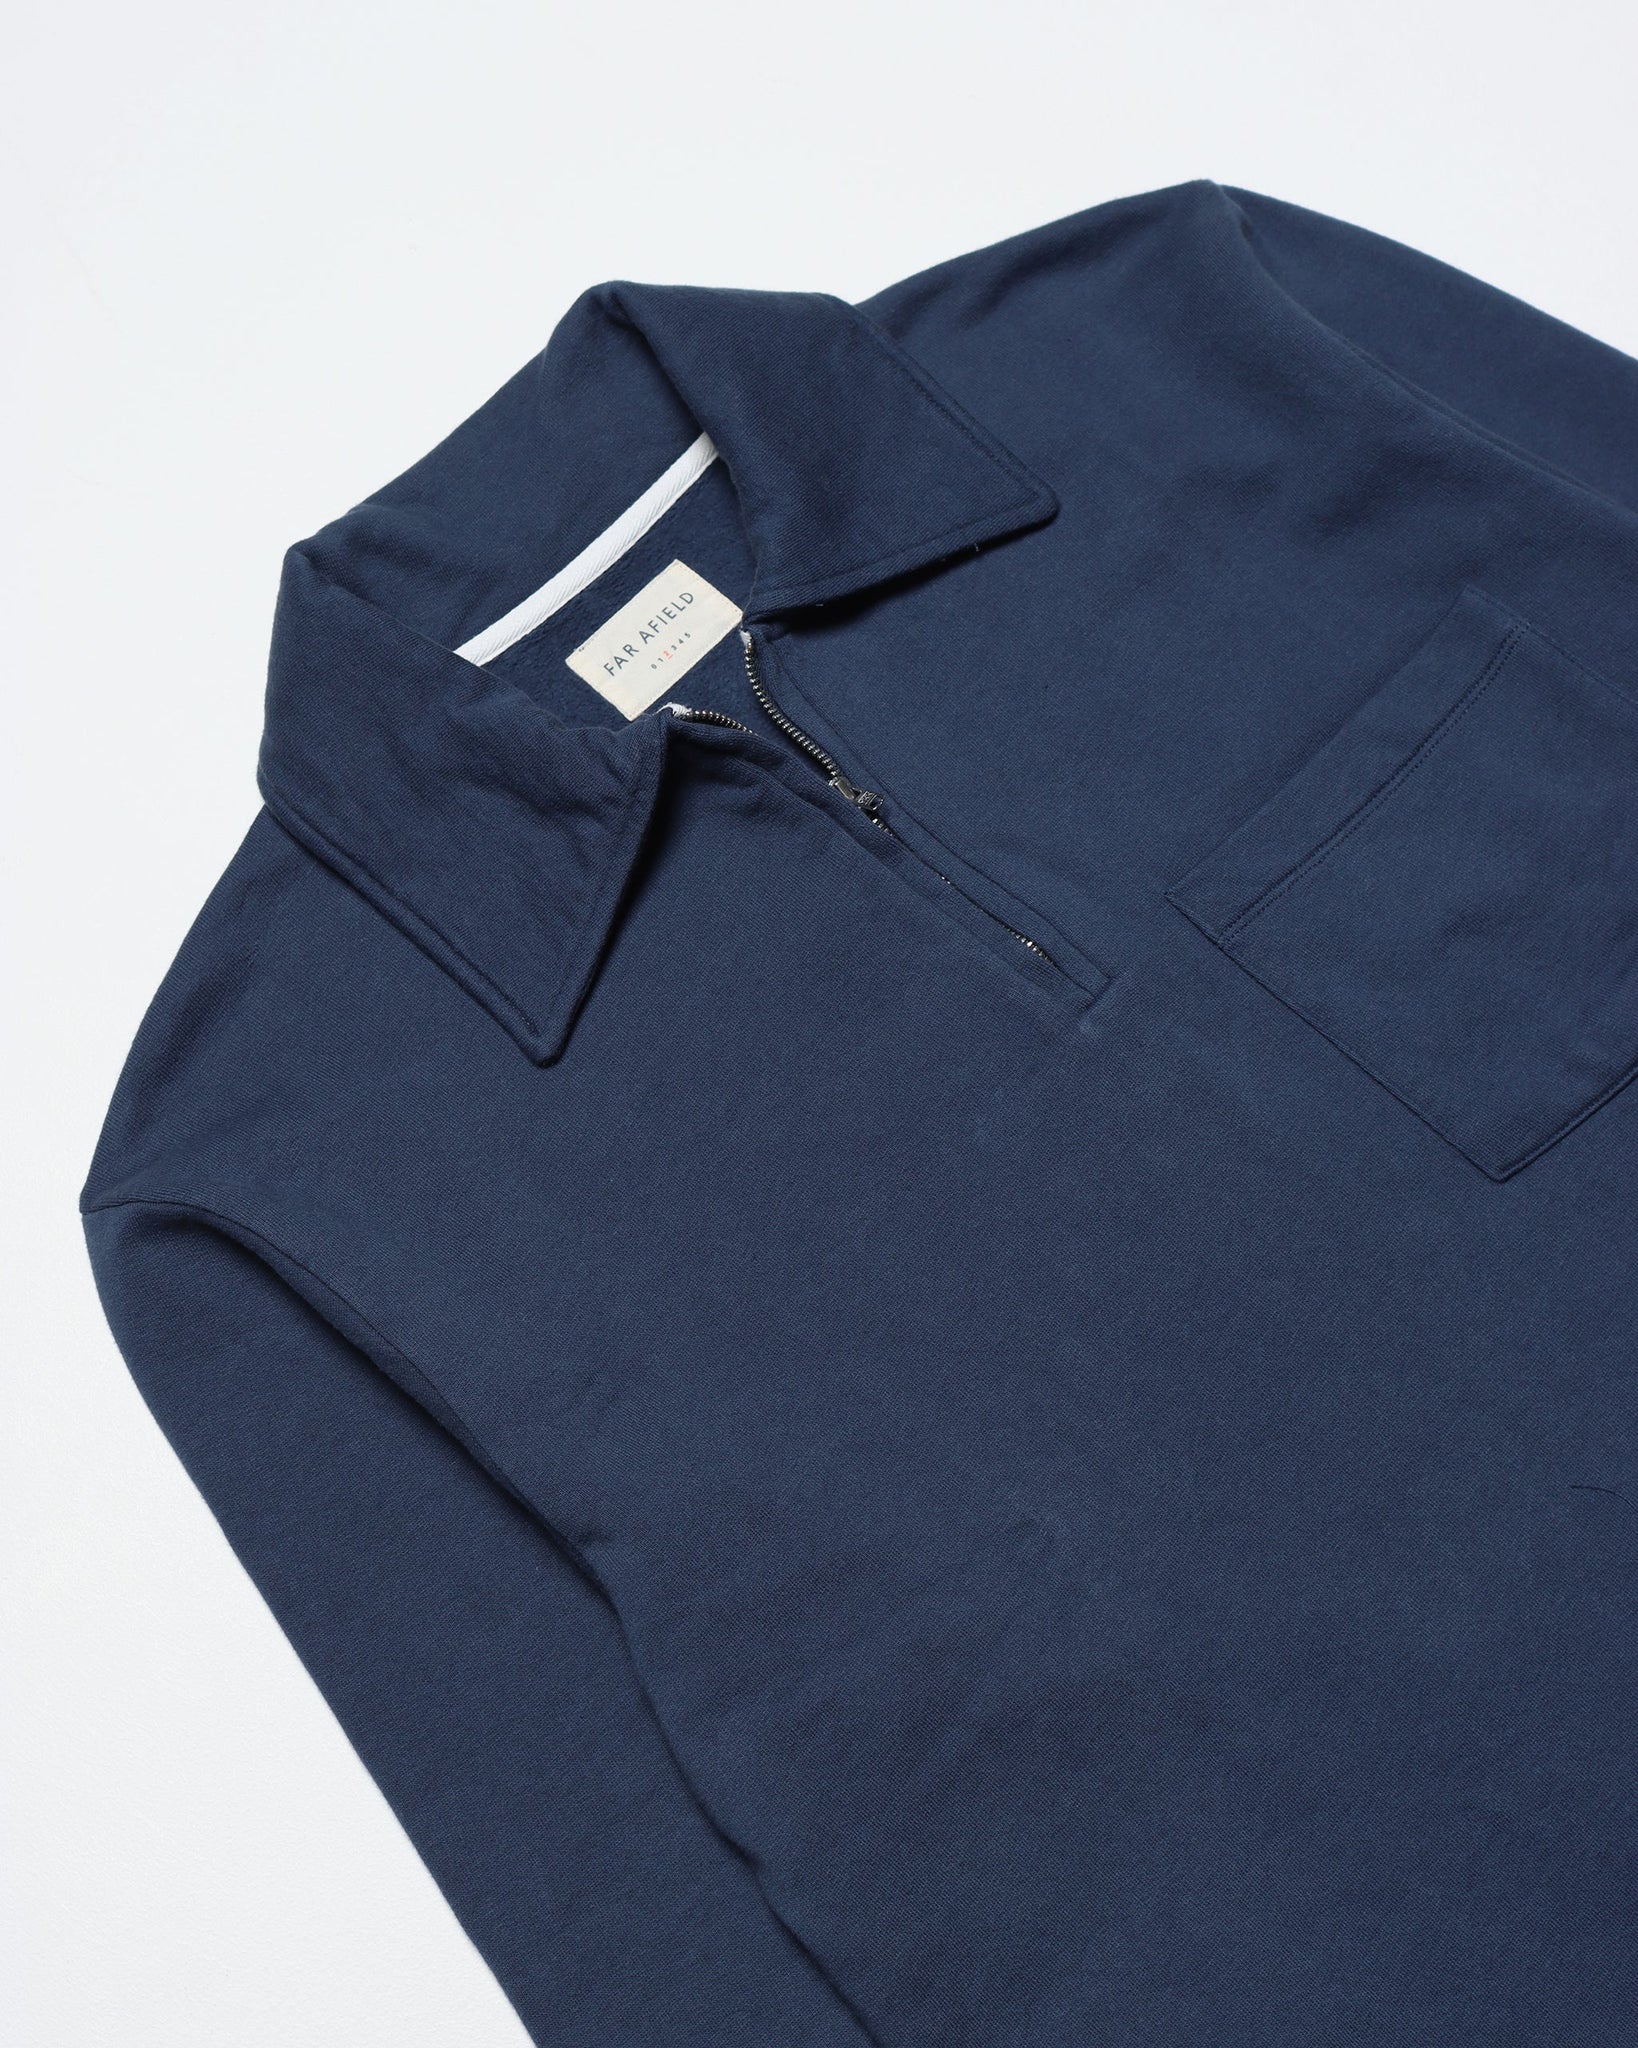 FAR AFIELD - Levy Half Zip Sweatshirt - Cotton - Blue